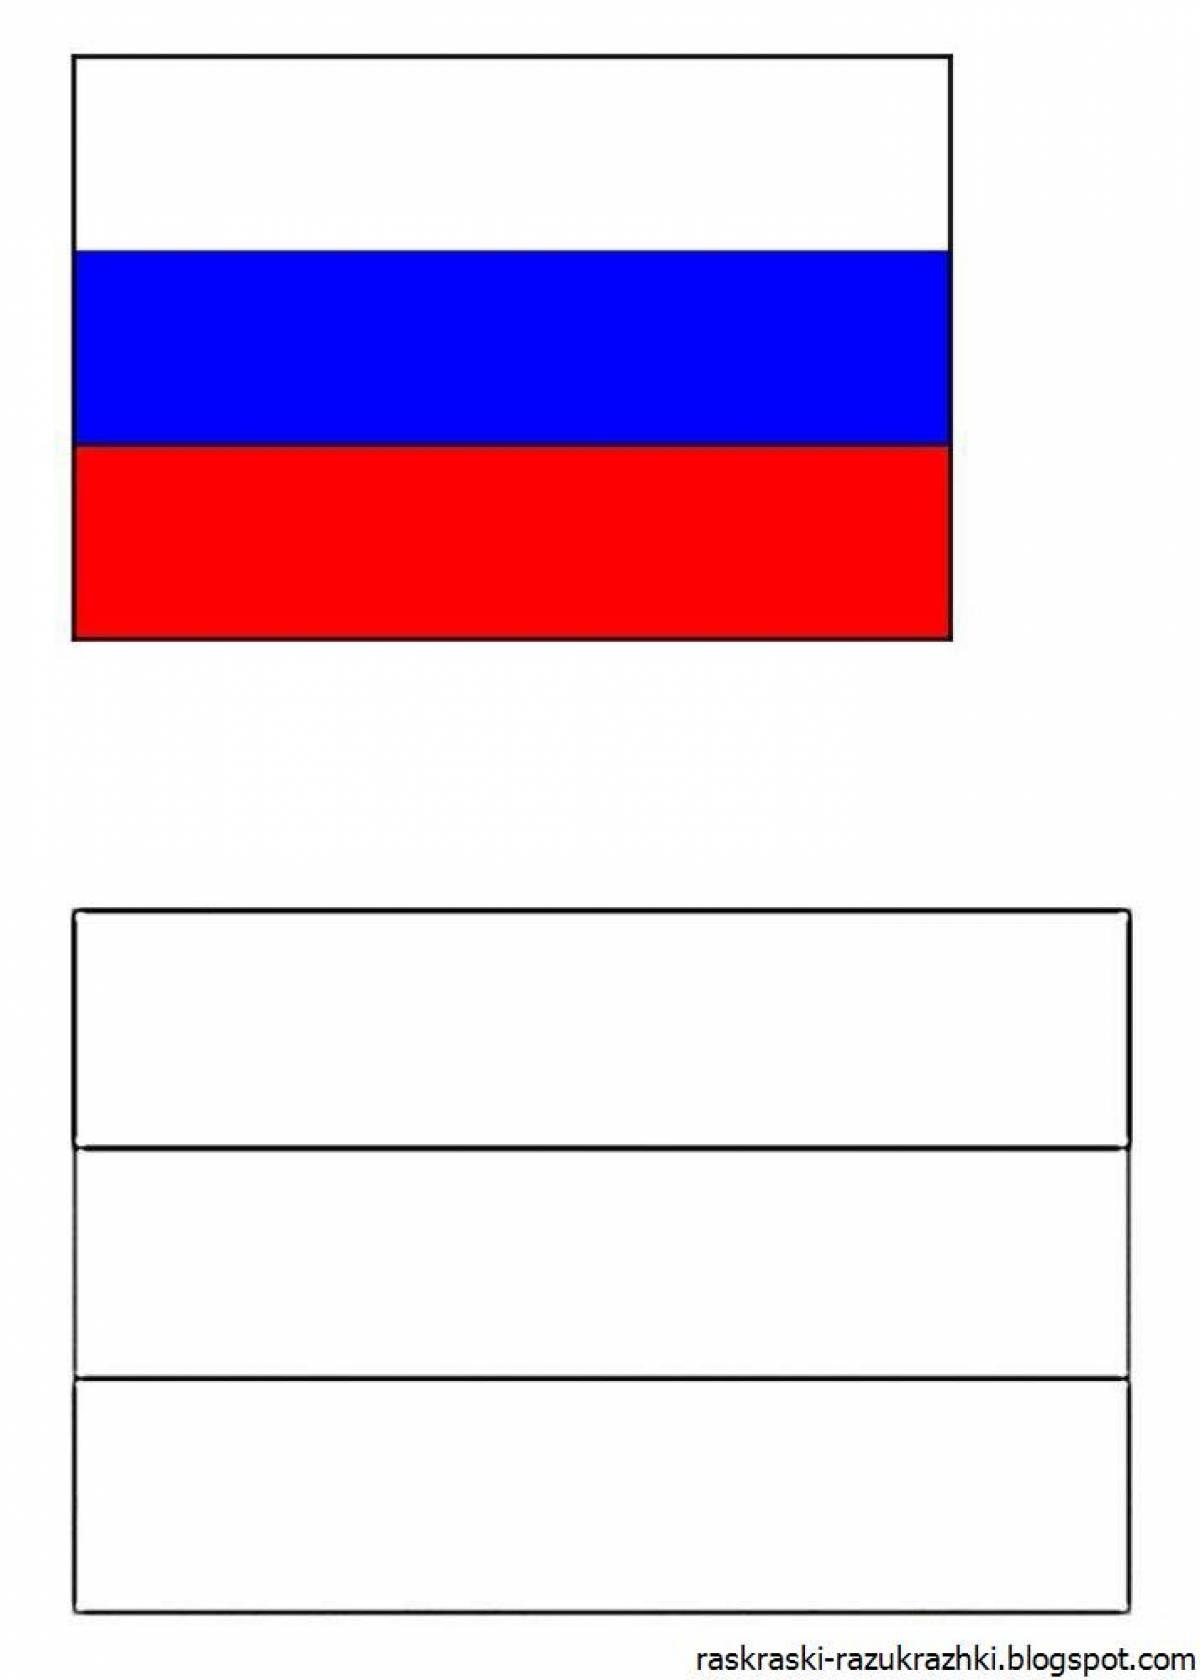 Раскраска яркий флаг россии